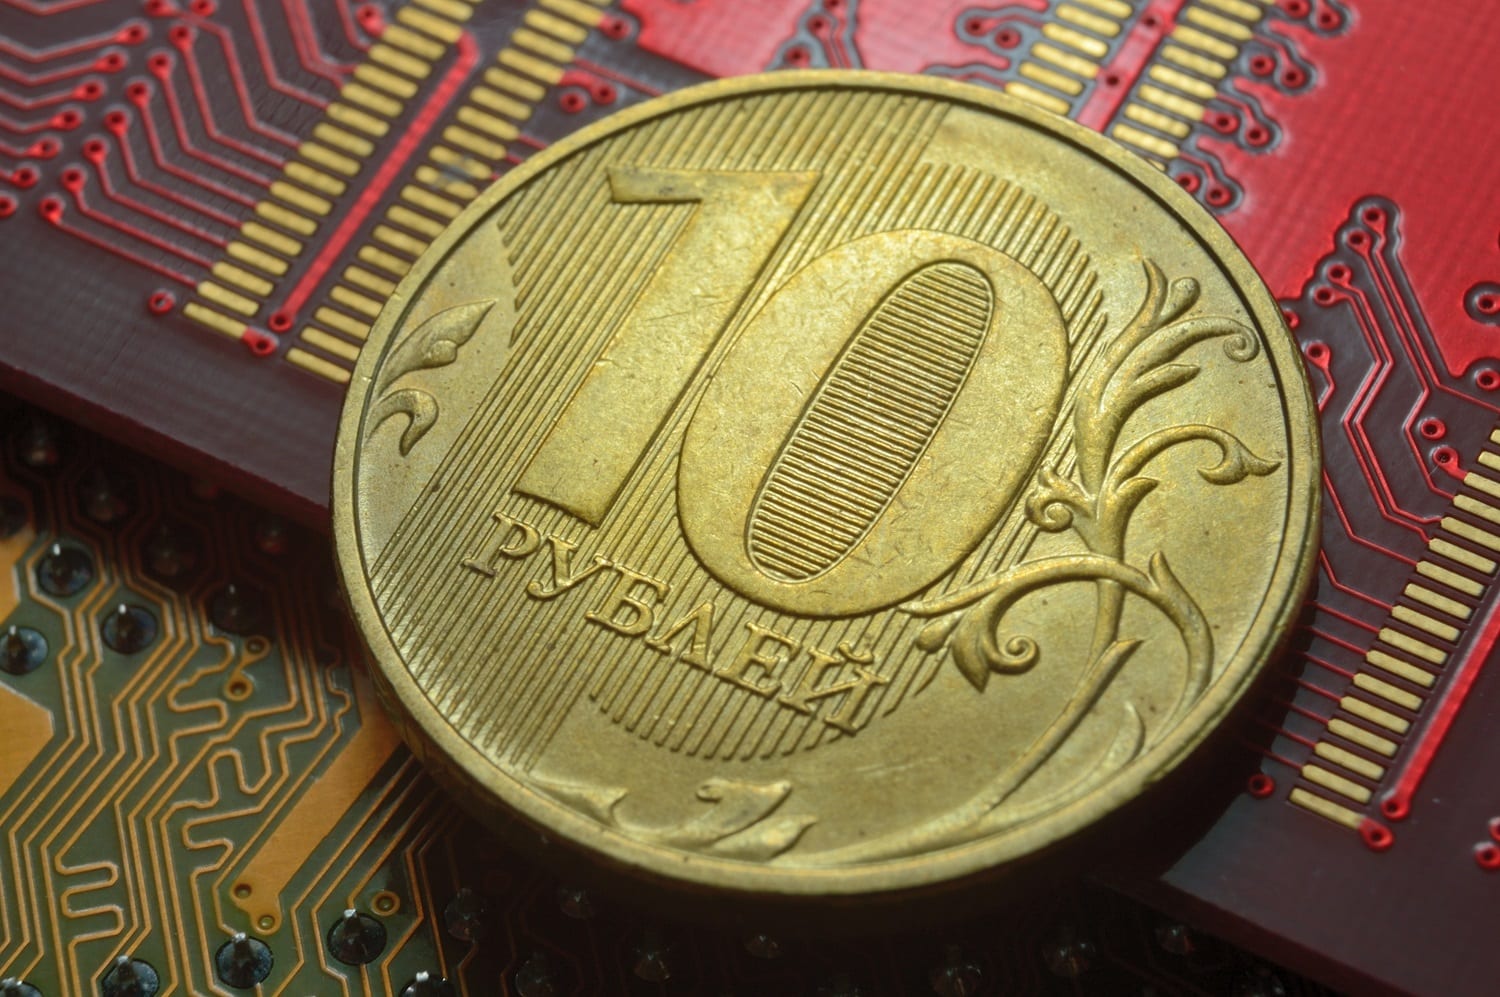 A Russian 10-ruble coin lies on several microcircuits.